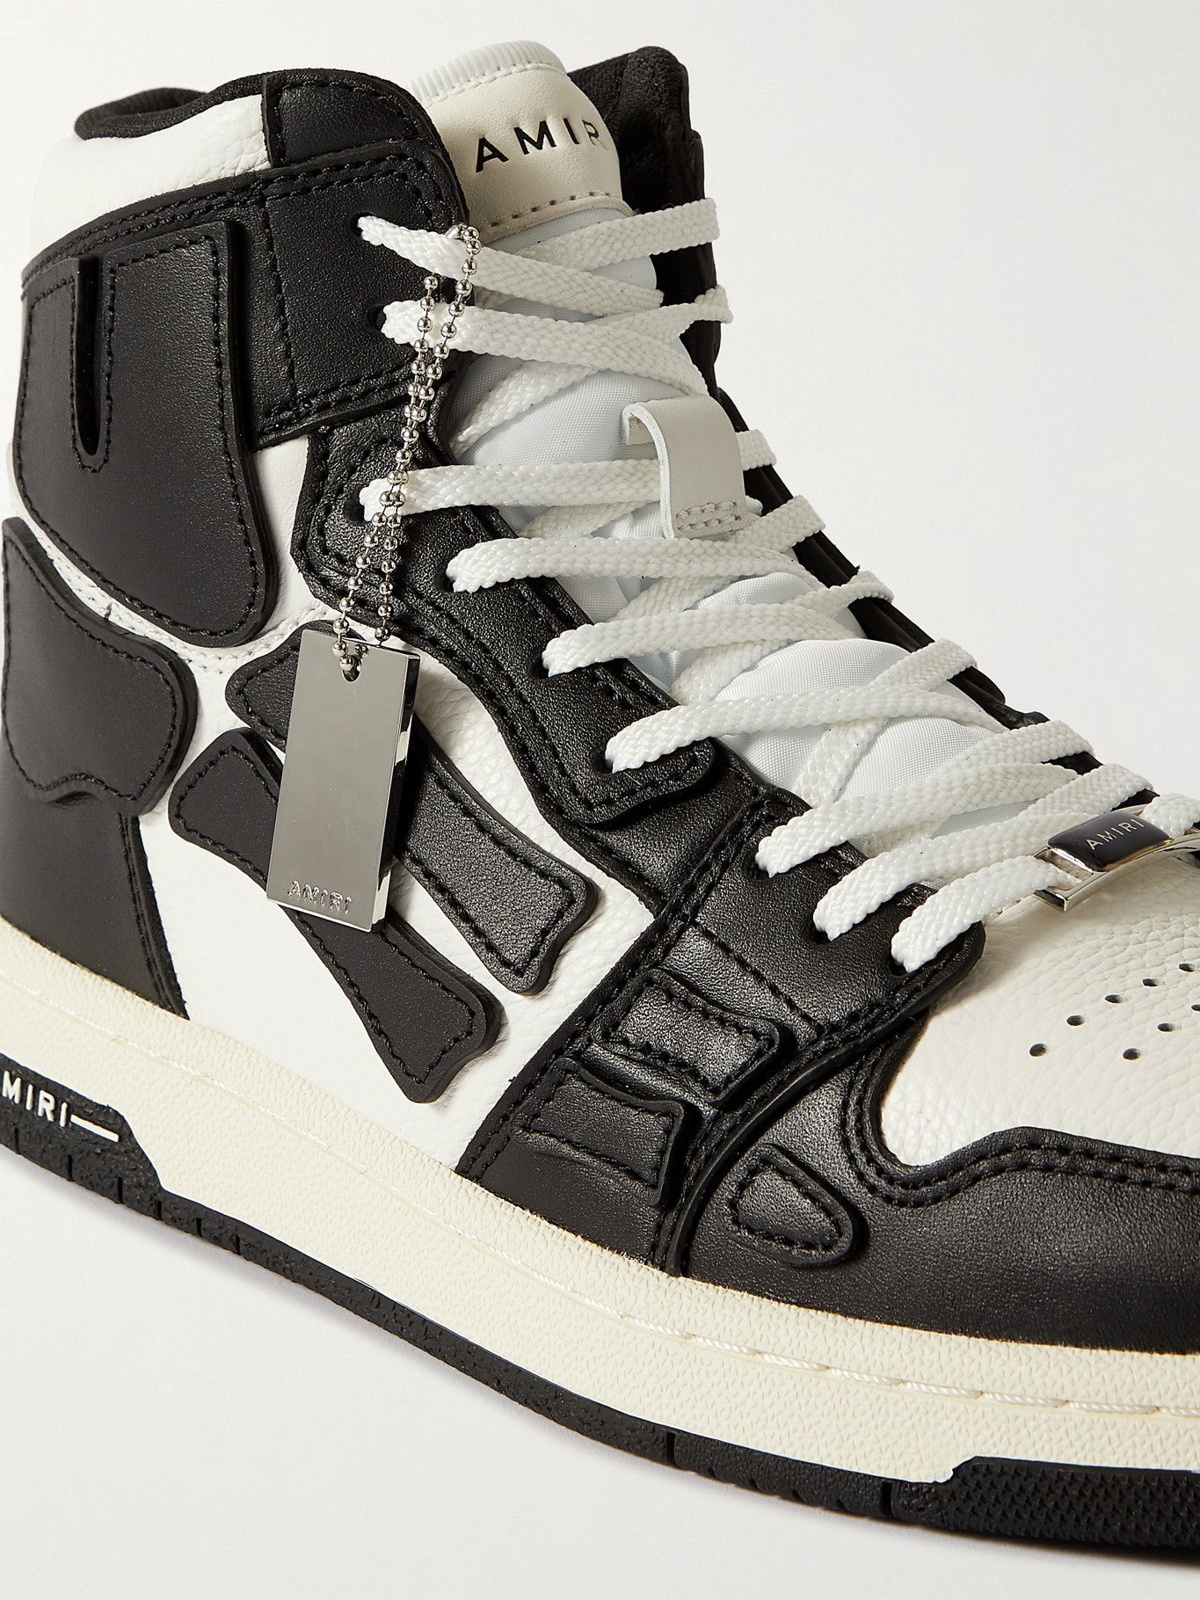 AMIRI - Skel-Top Colour-Block Leather High-Top Sneakers - Black Amiri